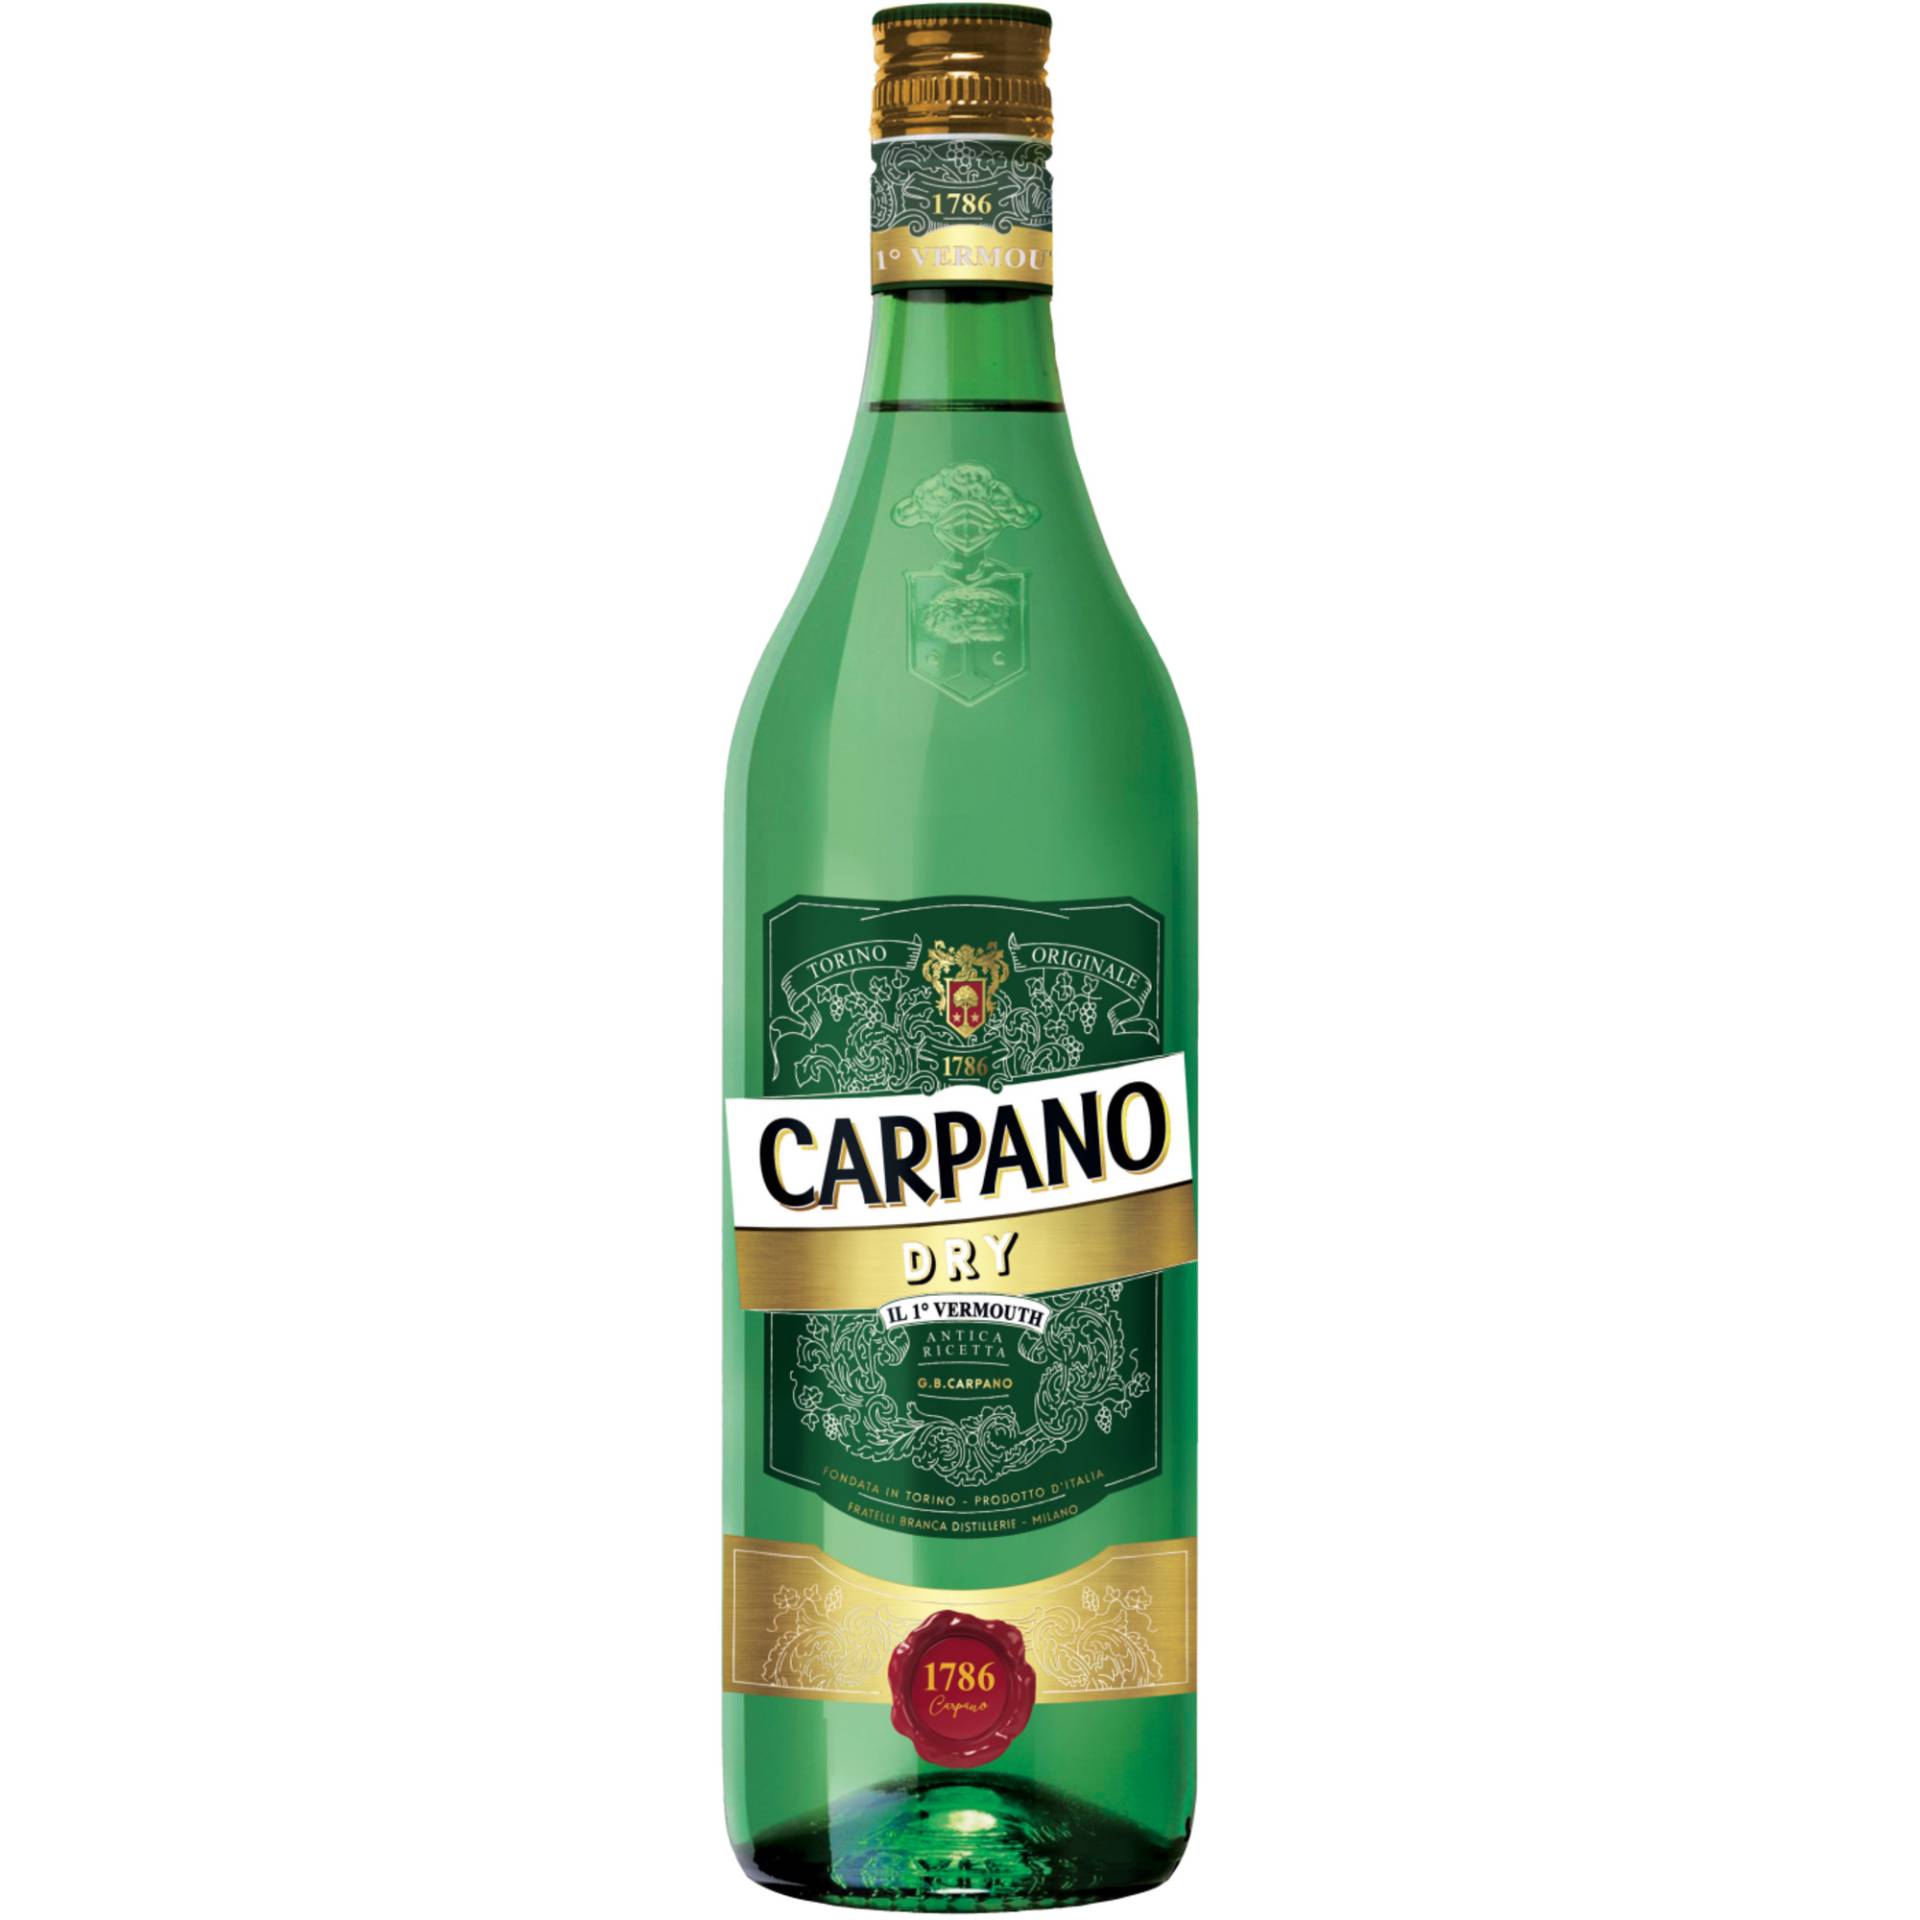 Carpano Dry Vermouth, Italien, 0,75 L, 18% Vol., Spirituosen von Fratelli Branca Distillerie S.r.l., Via Resegone 2 20159 Milano Italien